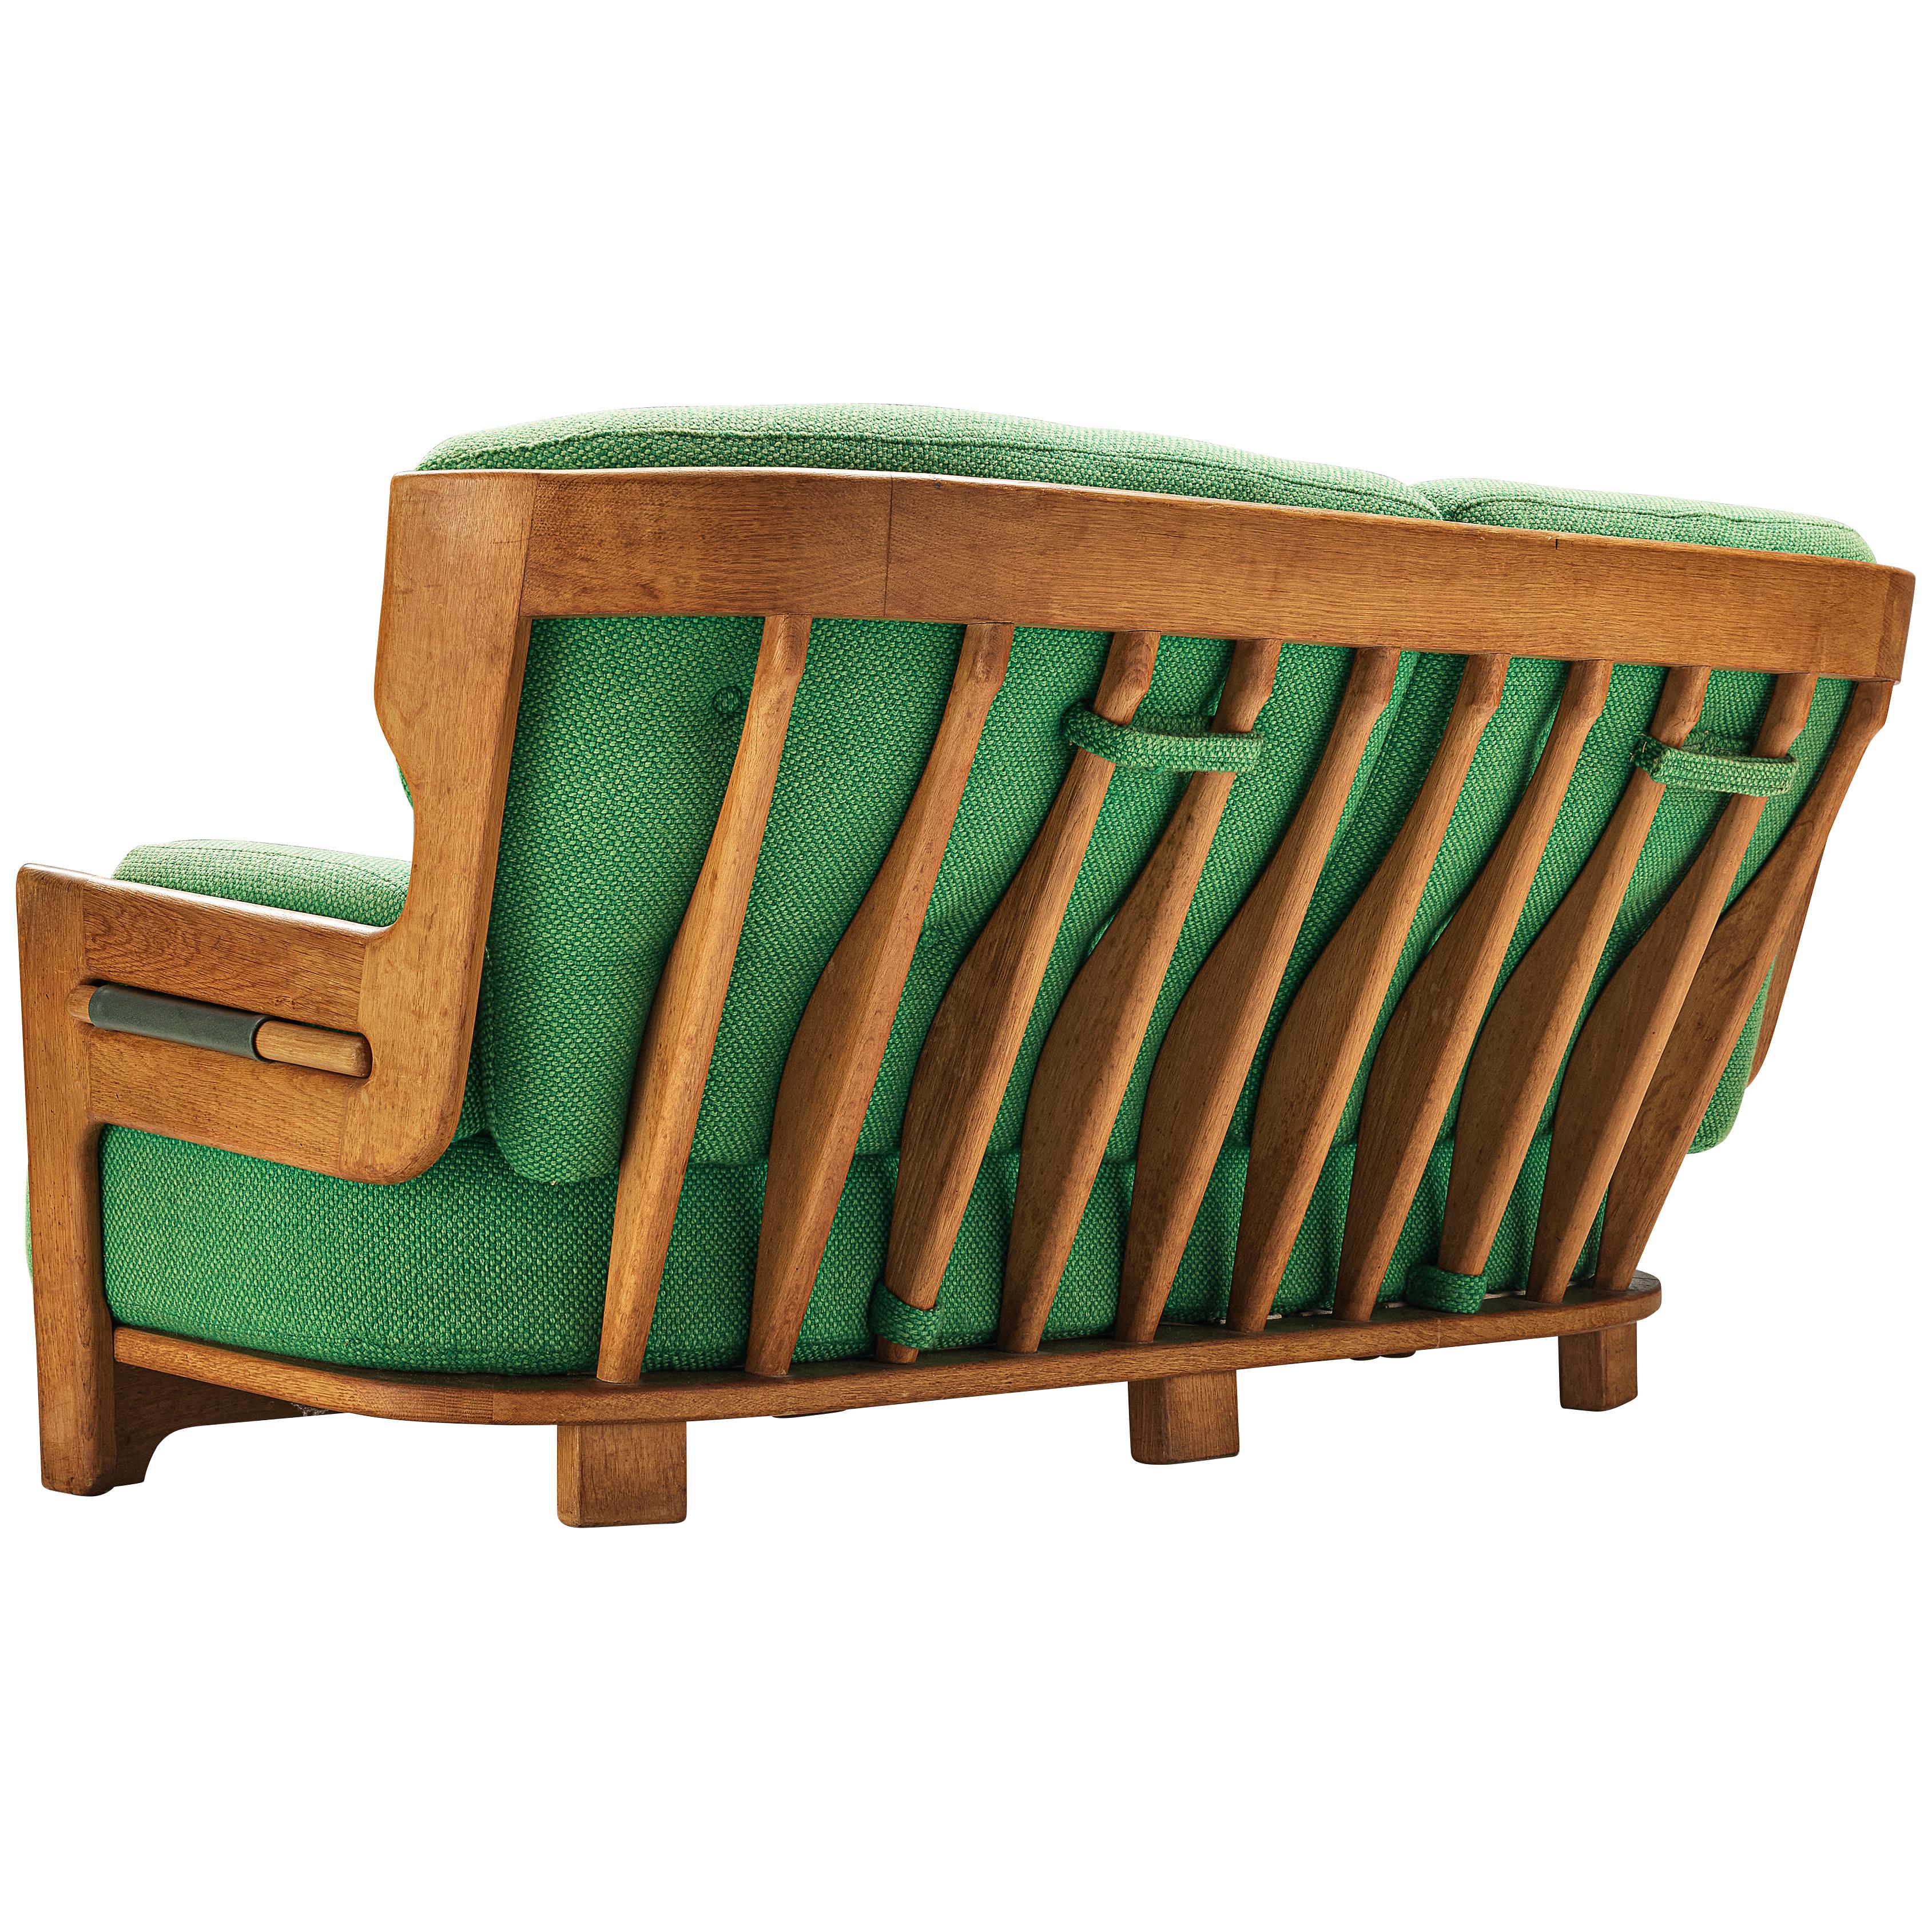 Guillerme & Chambron Sofa Model 'Denis' in Solid Oak in Green Upholstery